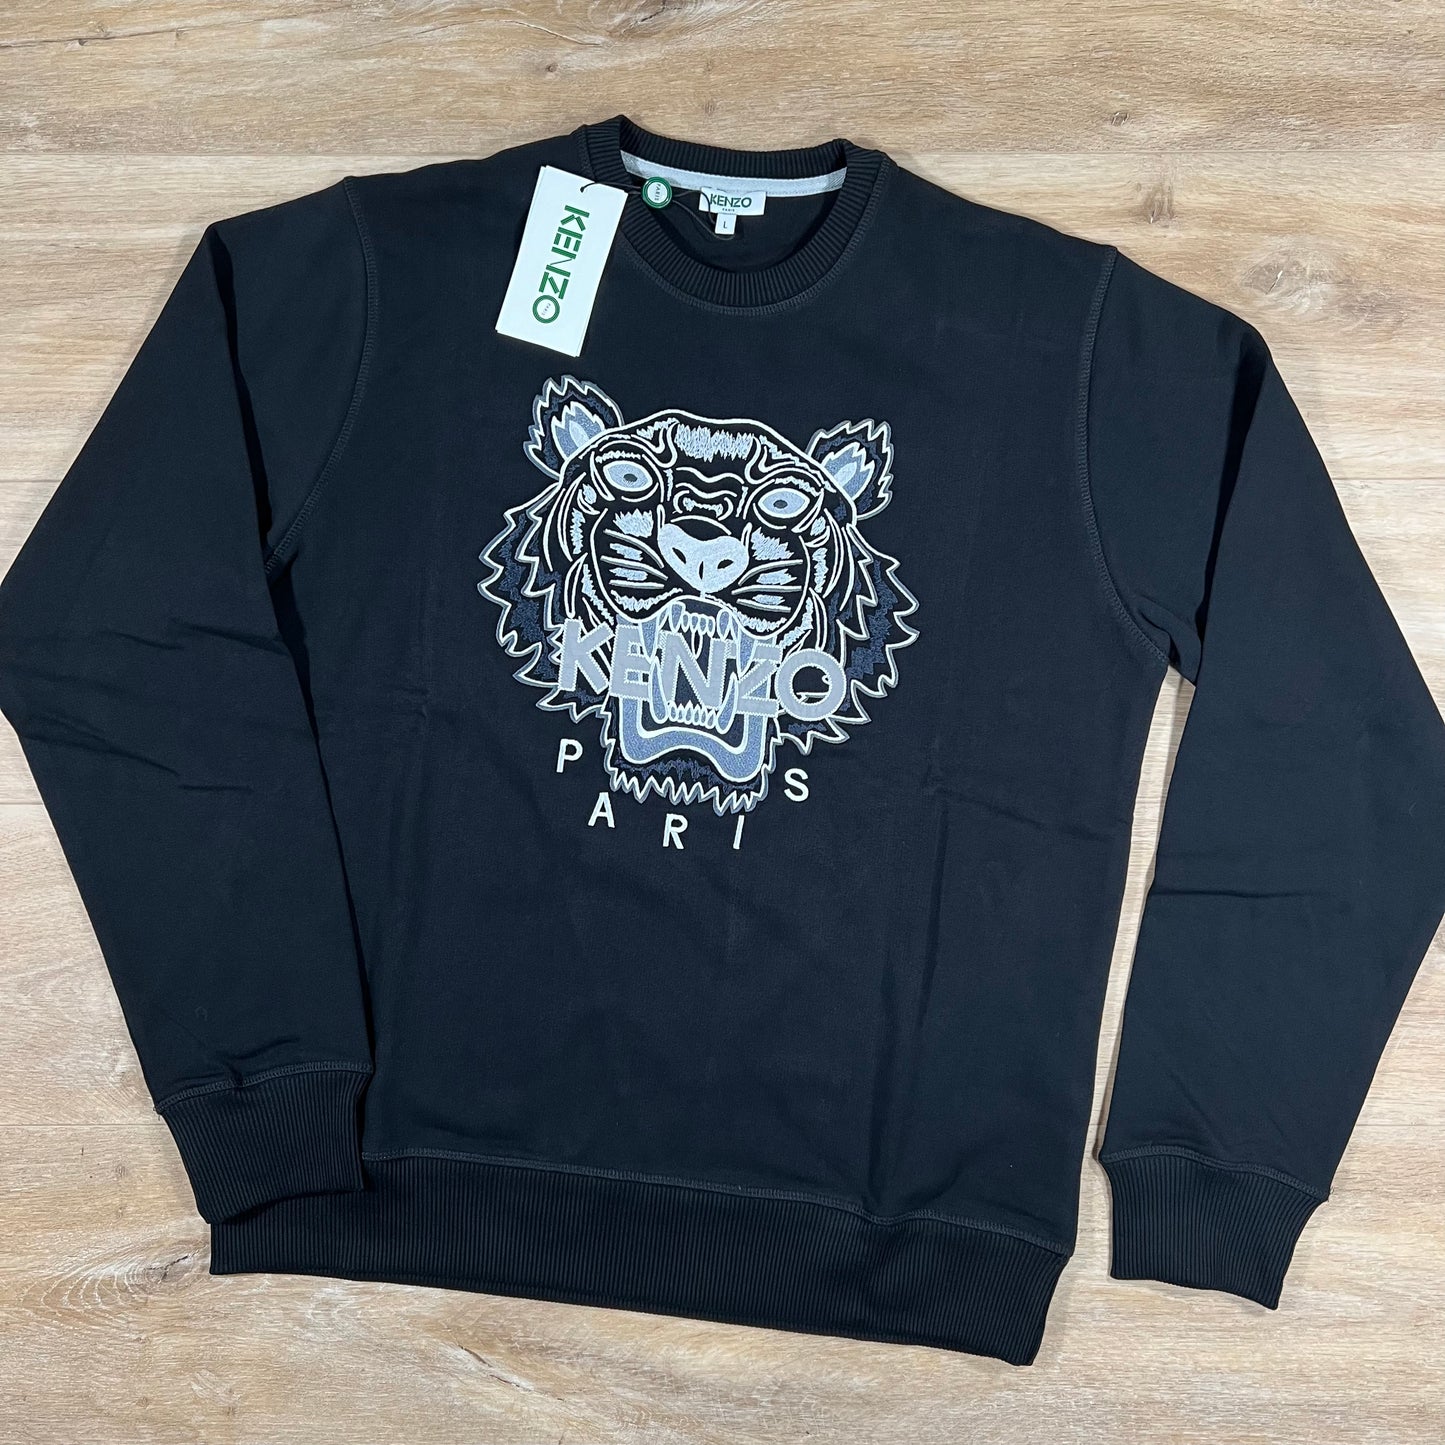 Kenzo Tiger Embroidered Sweatshirt in Black